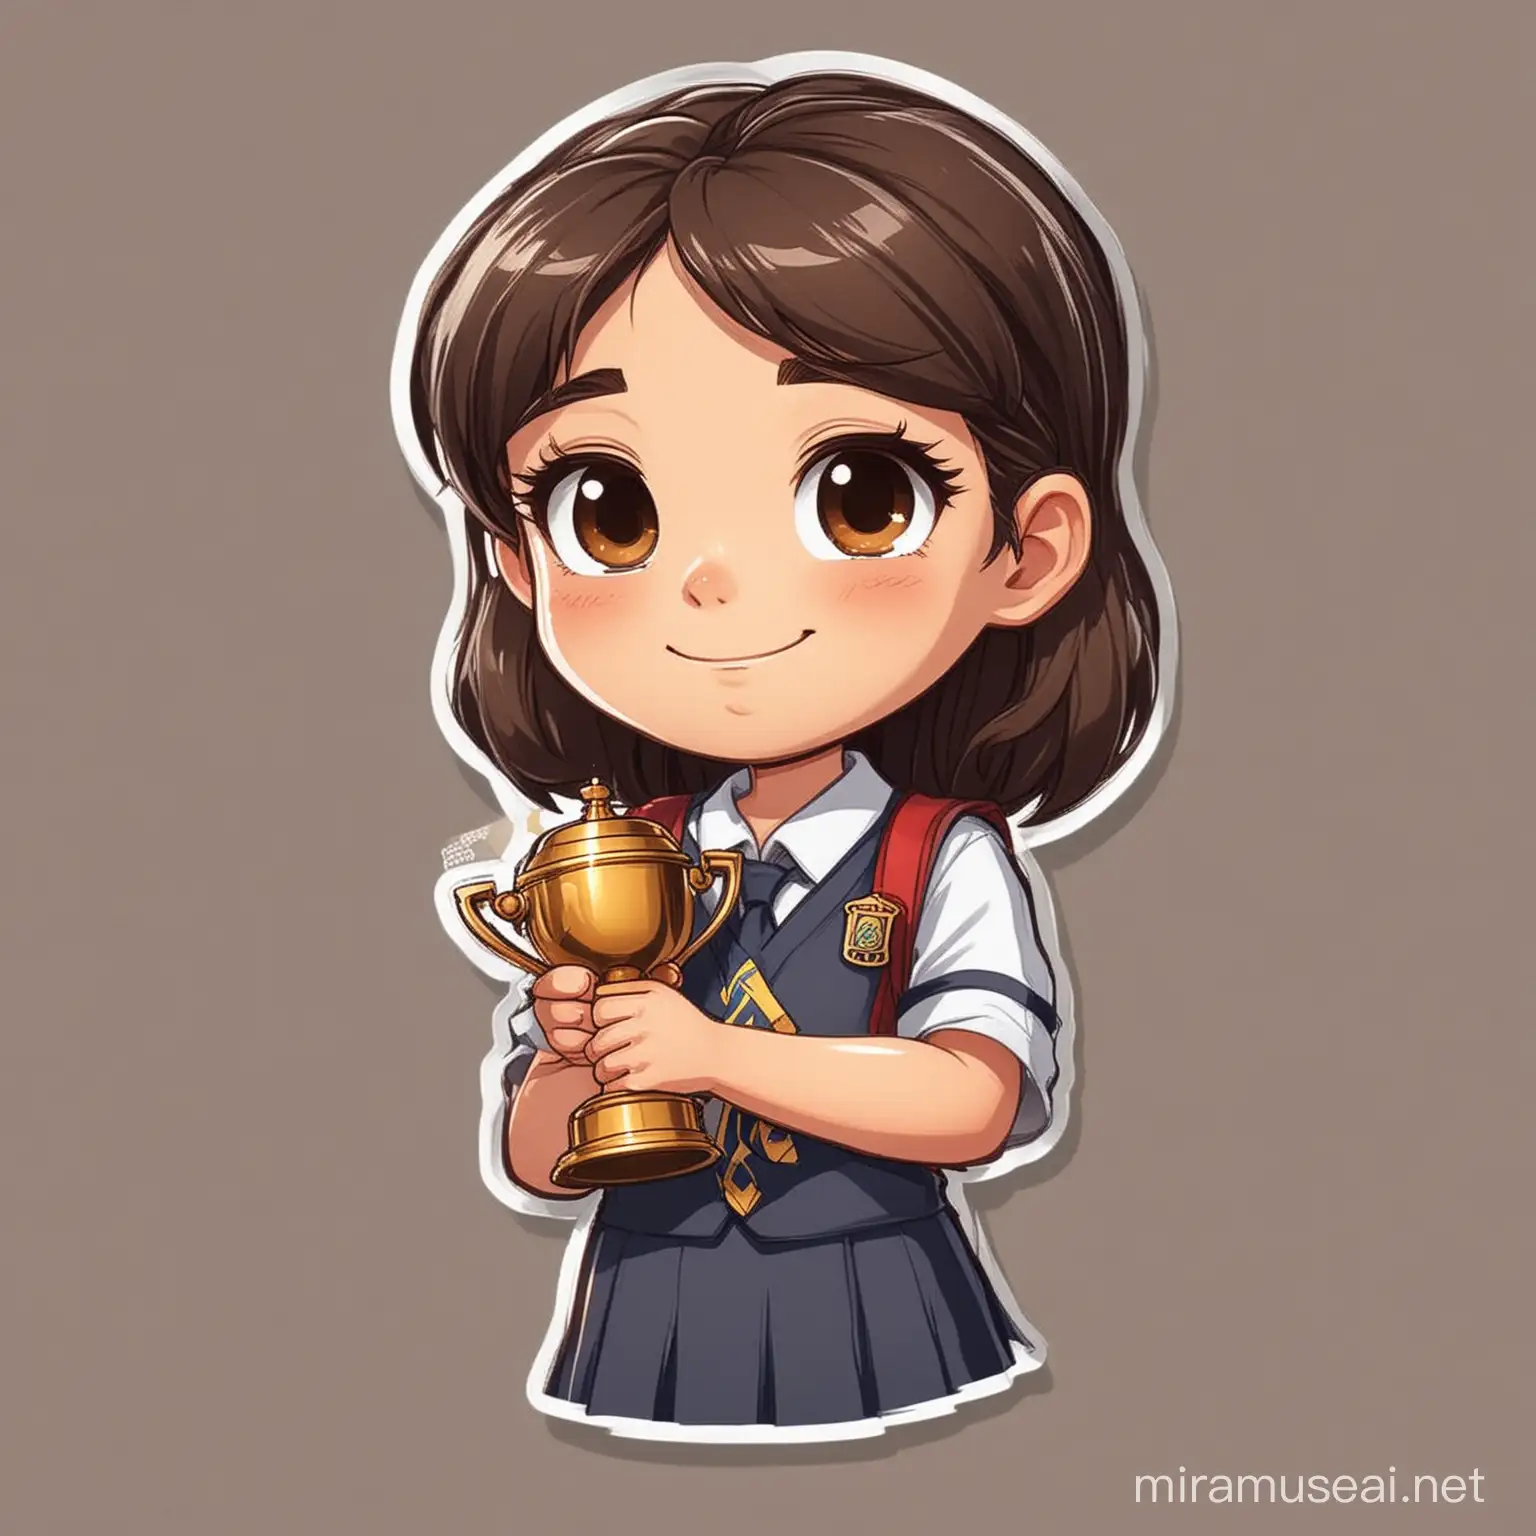 Schoolgirl Triumphantly Holding Trophy in Cartoon Sticker Style